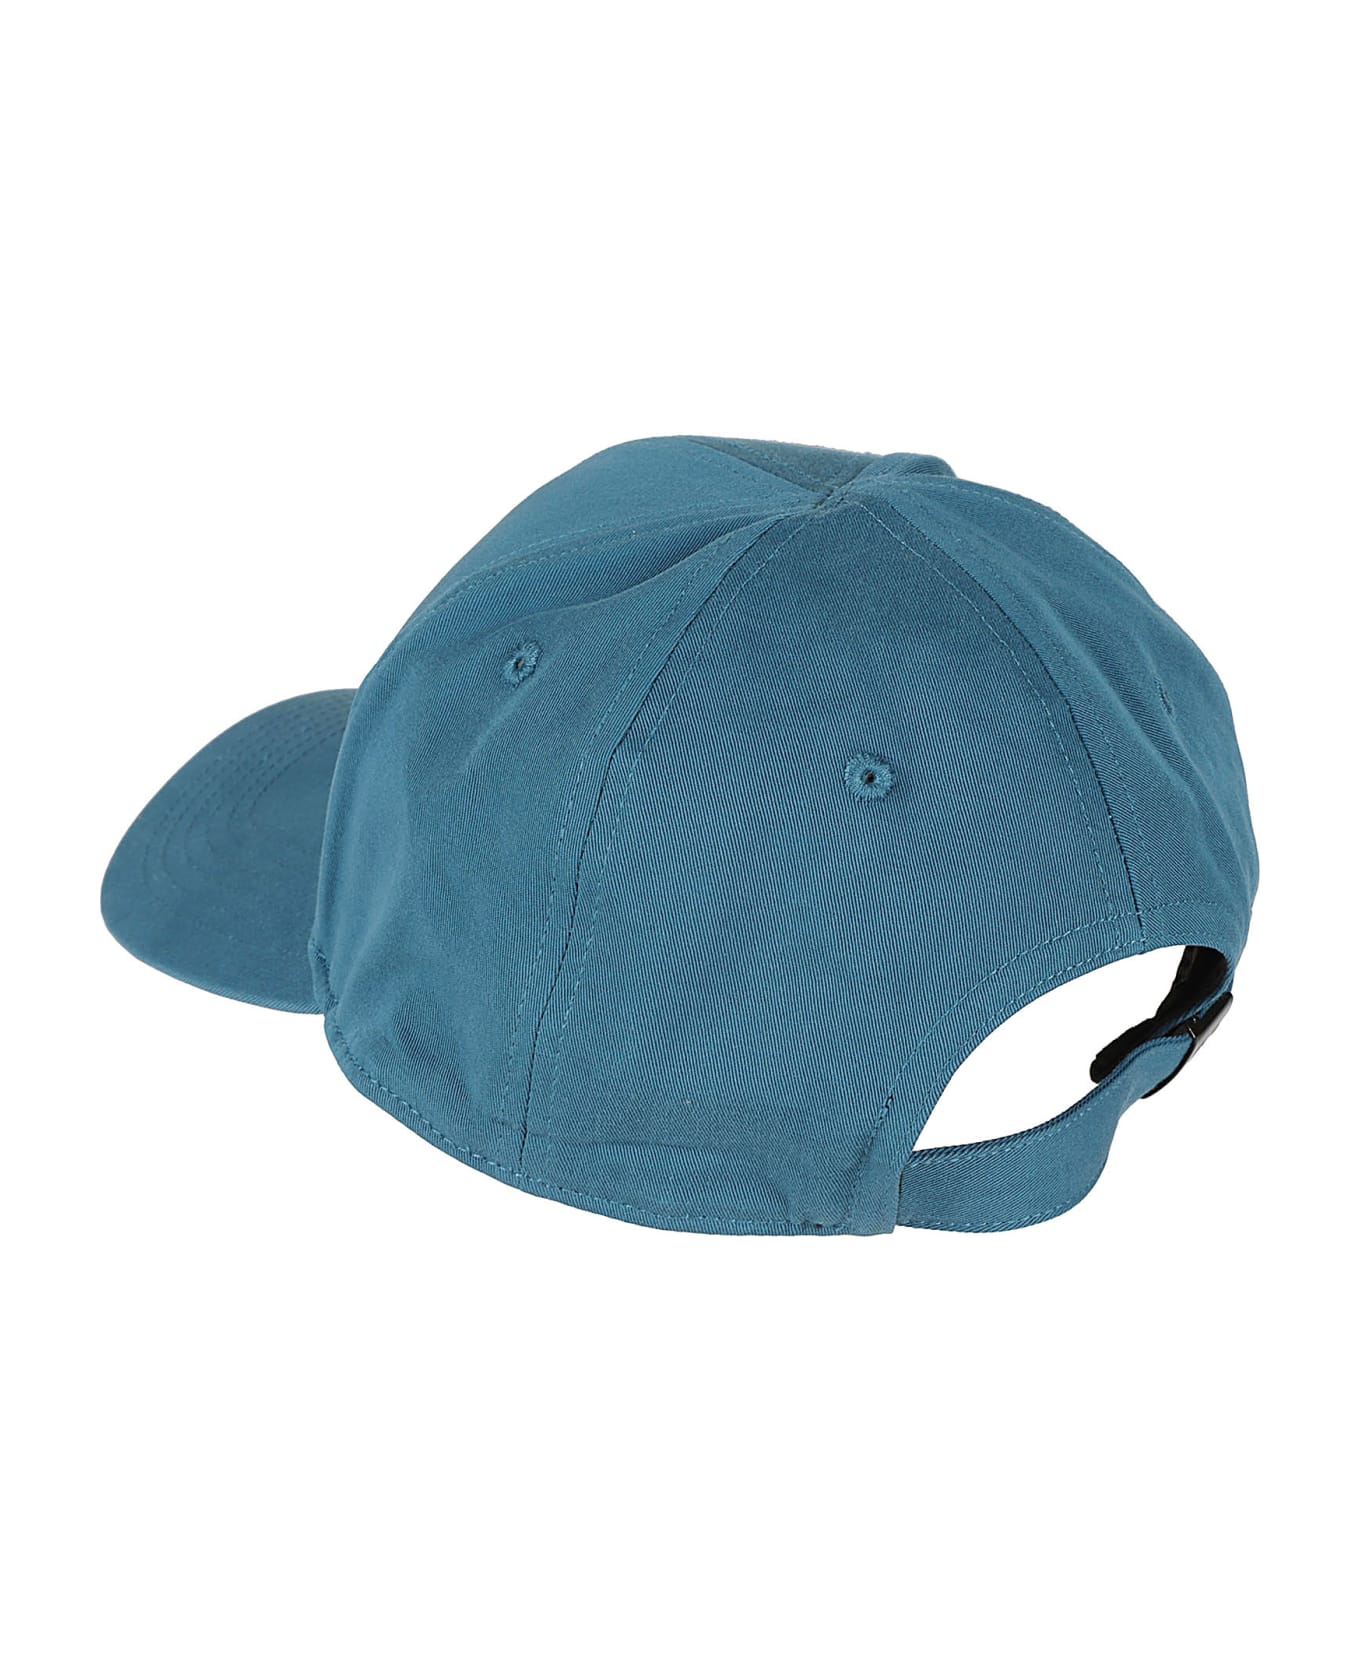 C.P. Company Gabardine Baseball Cap - Blu